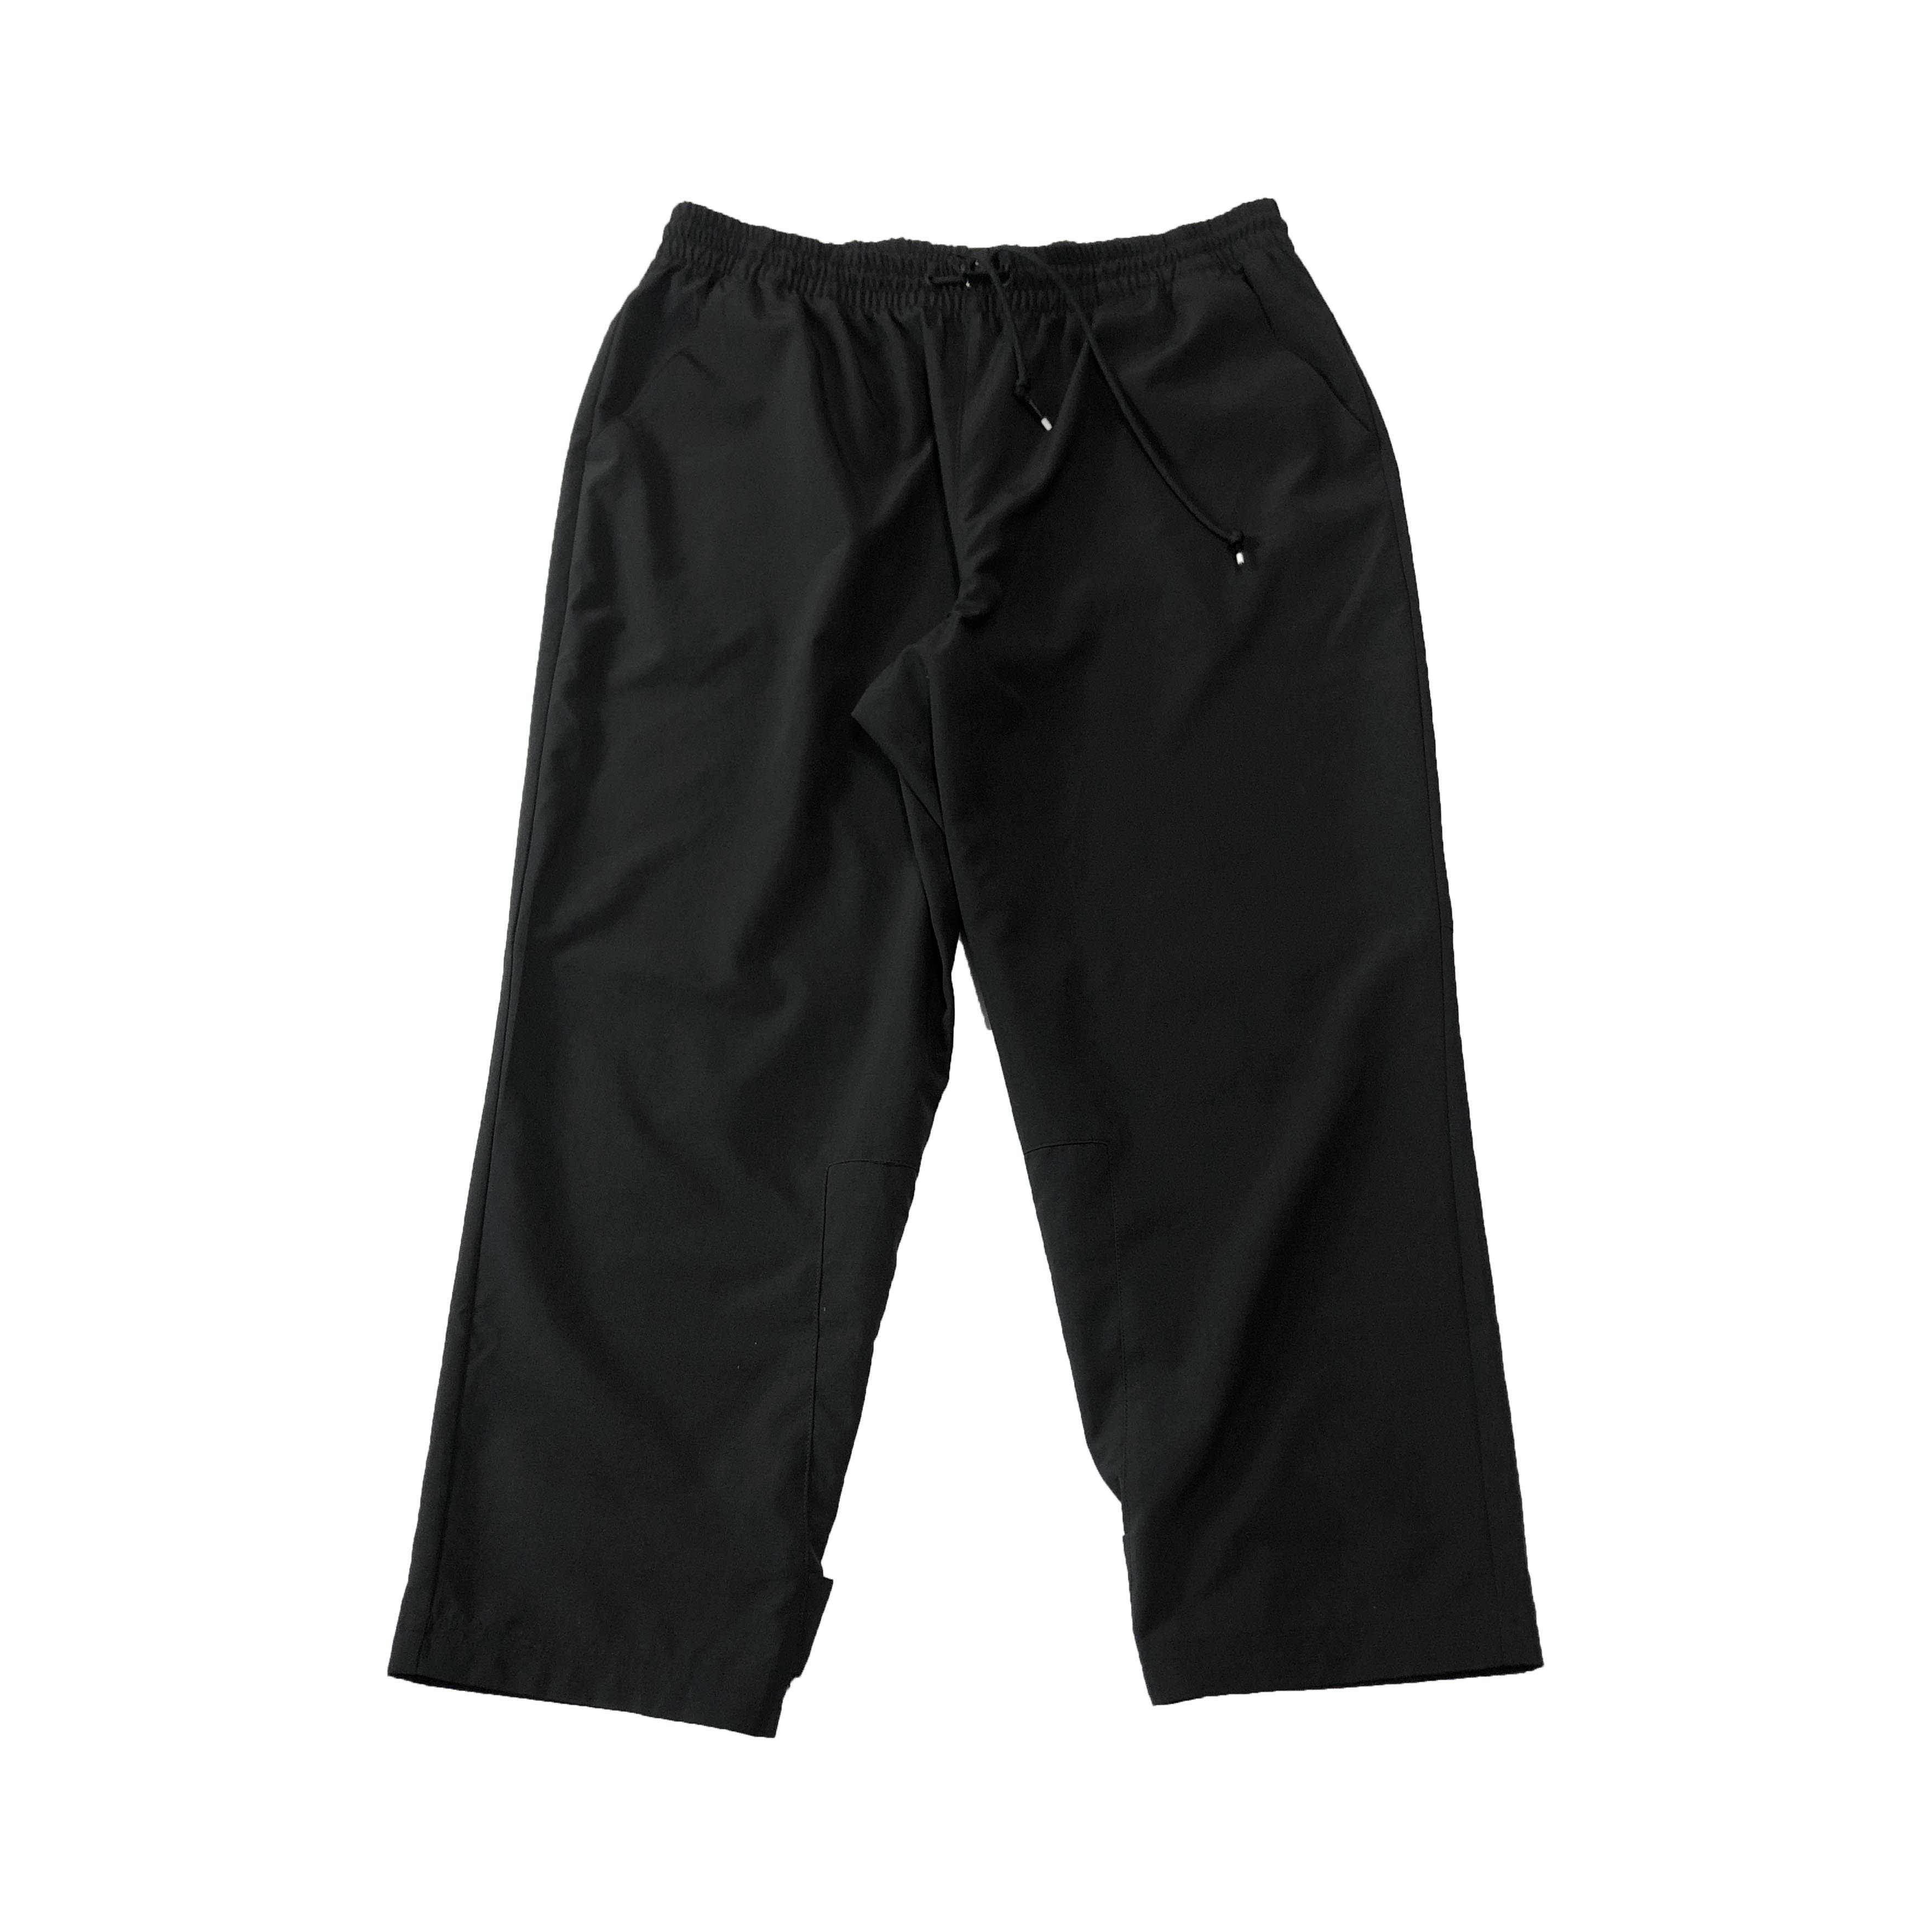 [Adidas] Strap Track Pants Black - Size 2XL